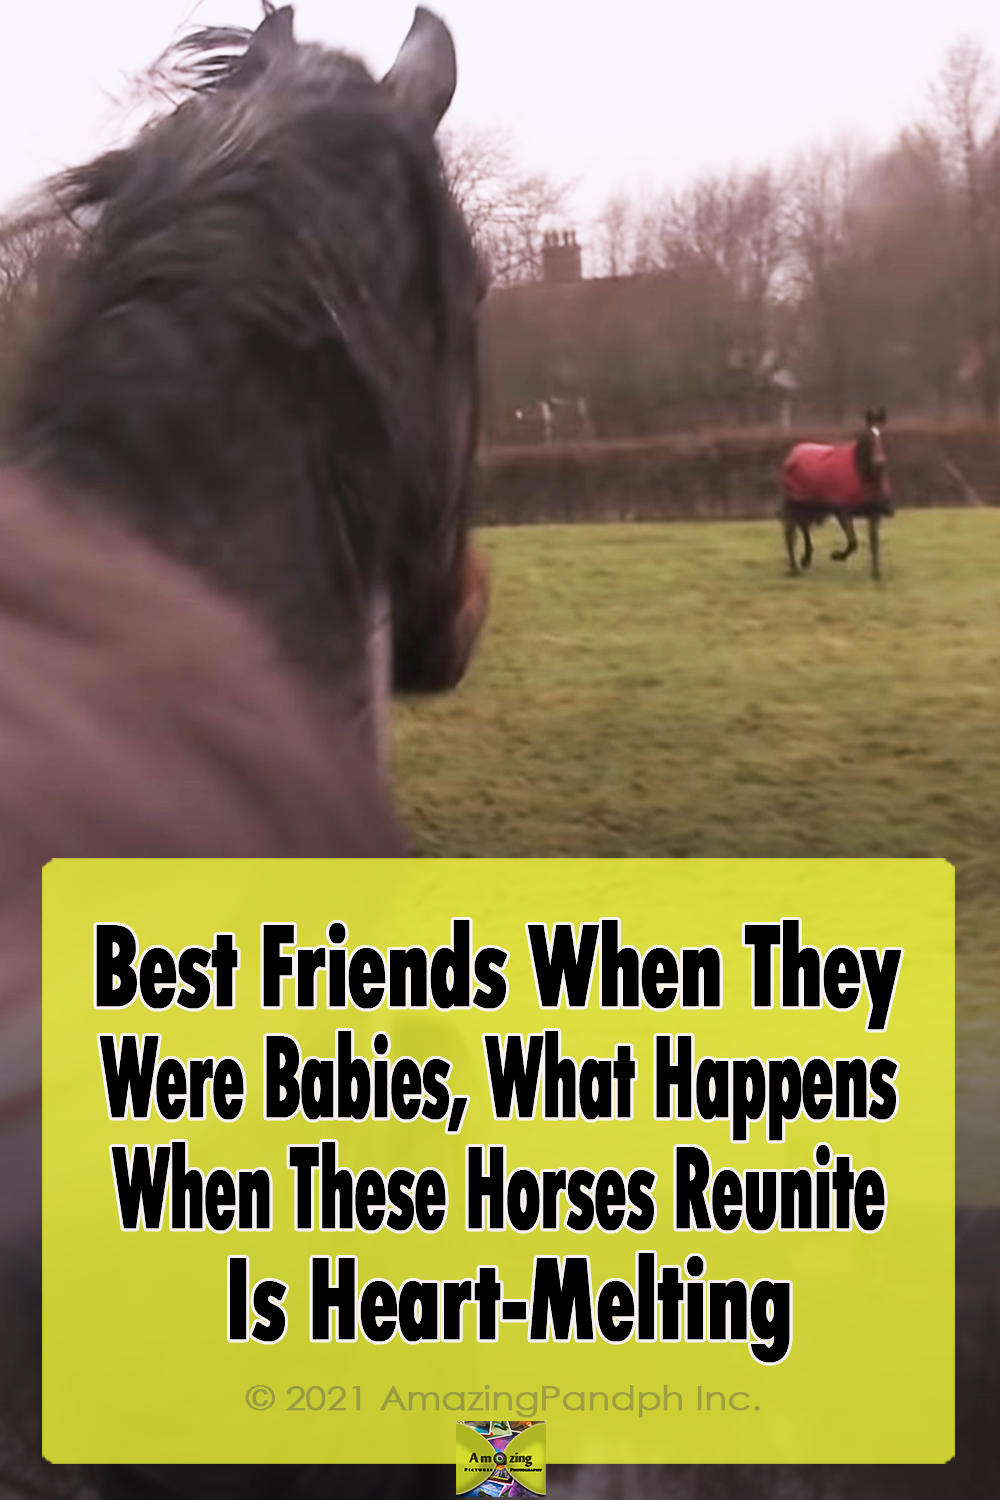 animals reunion, beautiful horses, Horse communication, Horses, Horses Reunion, wonderful animals, farm, emotional,